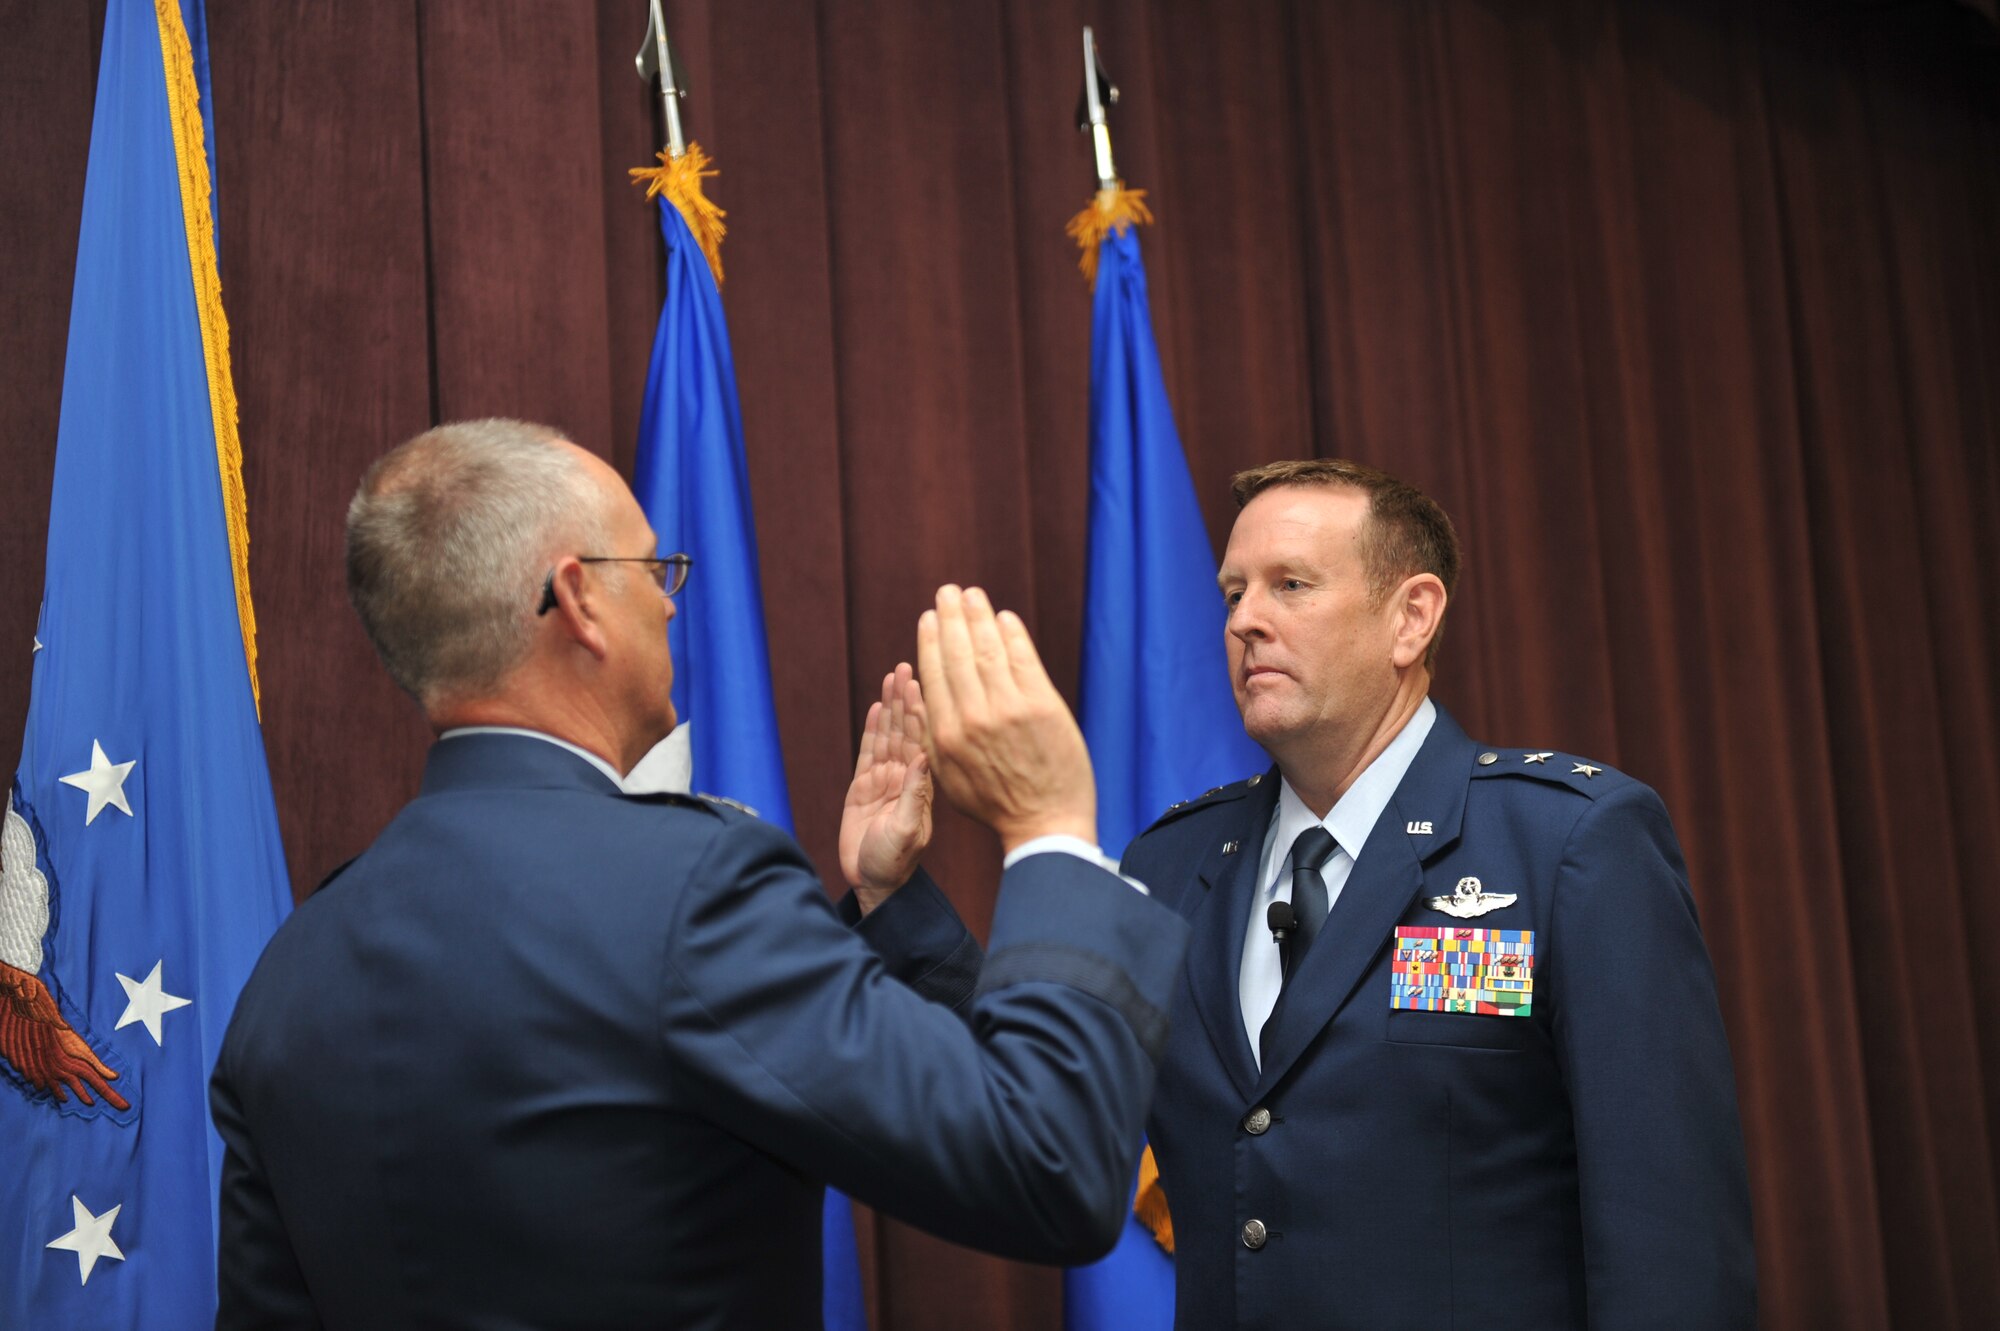 SCOTT AFB, Ill. - Lt. Gen. Robert R. Allardice, Commander, 18th Air Force, administers the Oath of Office to Maj. Gen. Robert K. Millmann, Jr., shortly after his promotion on June 10, 2011. 